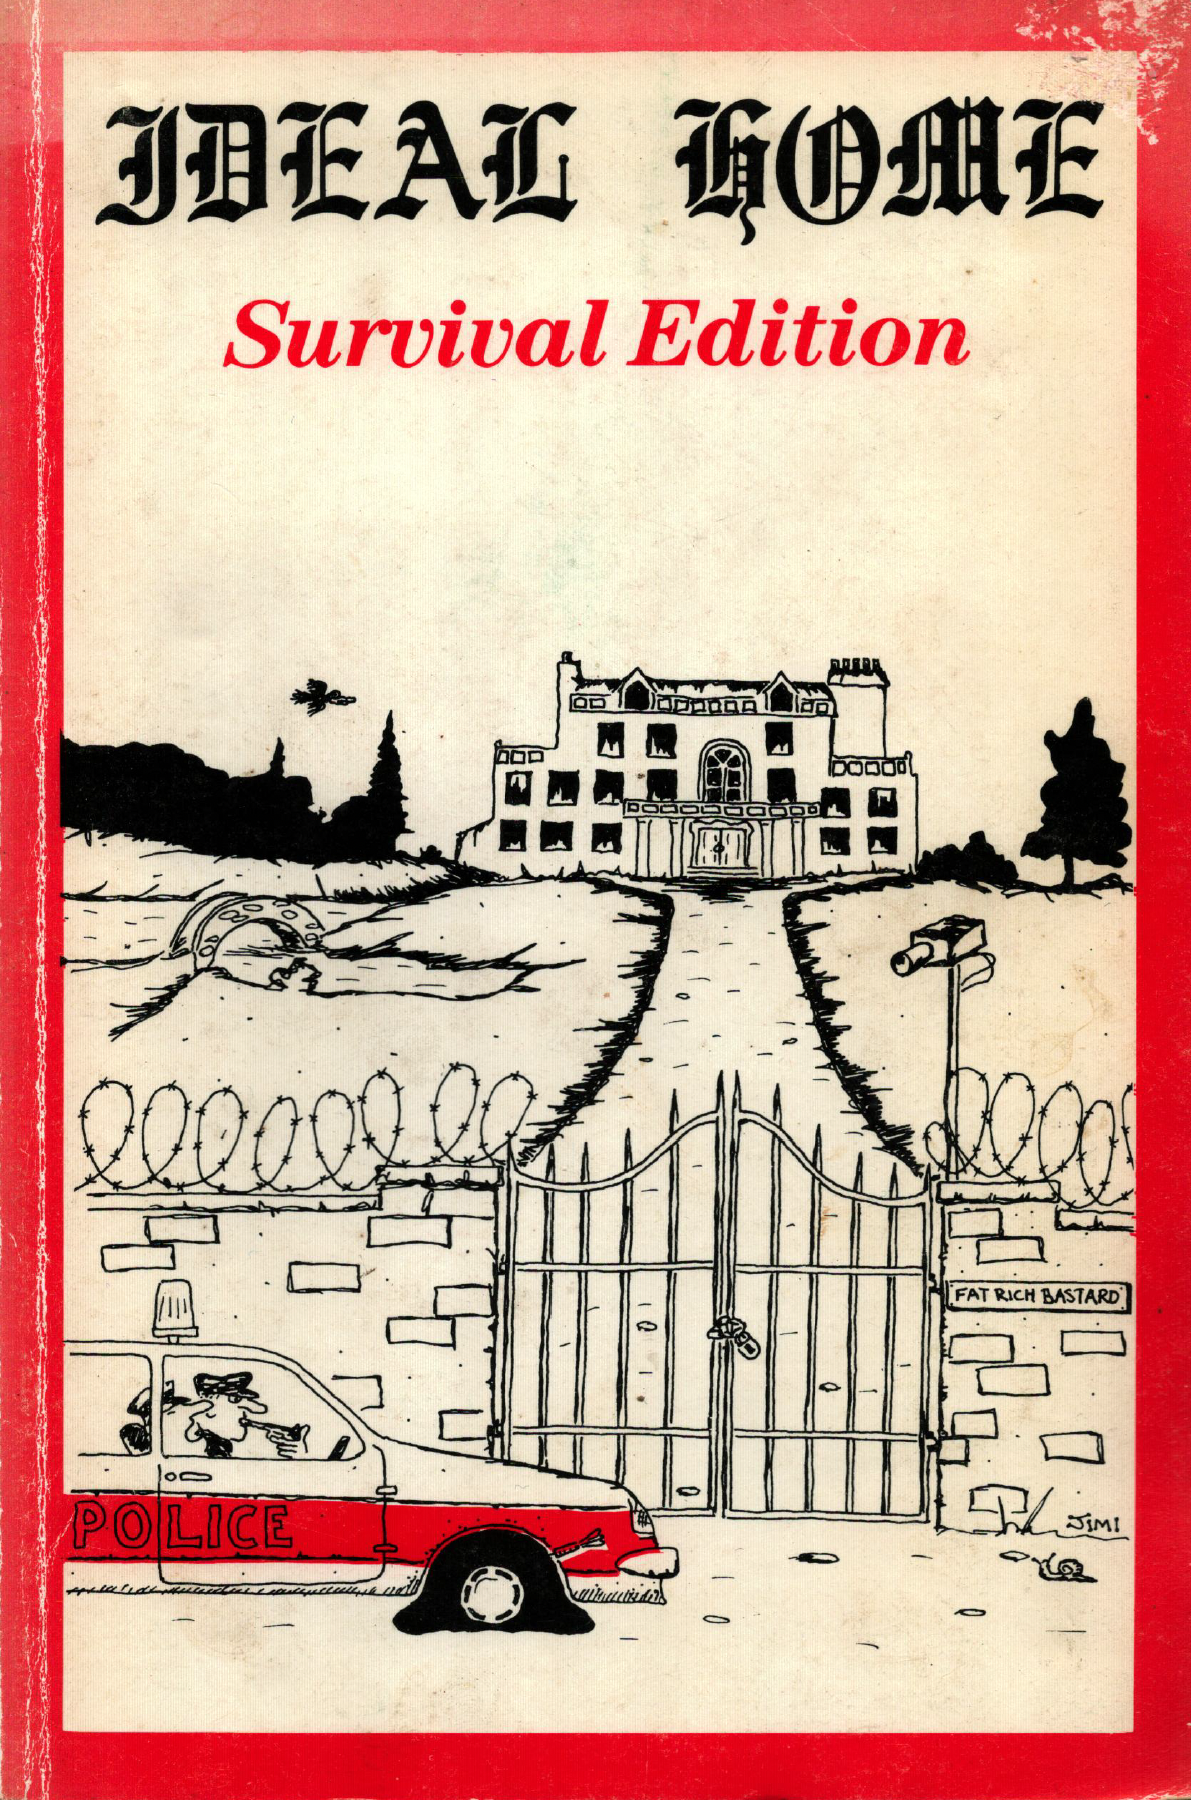 Ideal Home: Survival Edition – Suspect